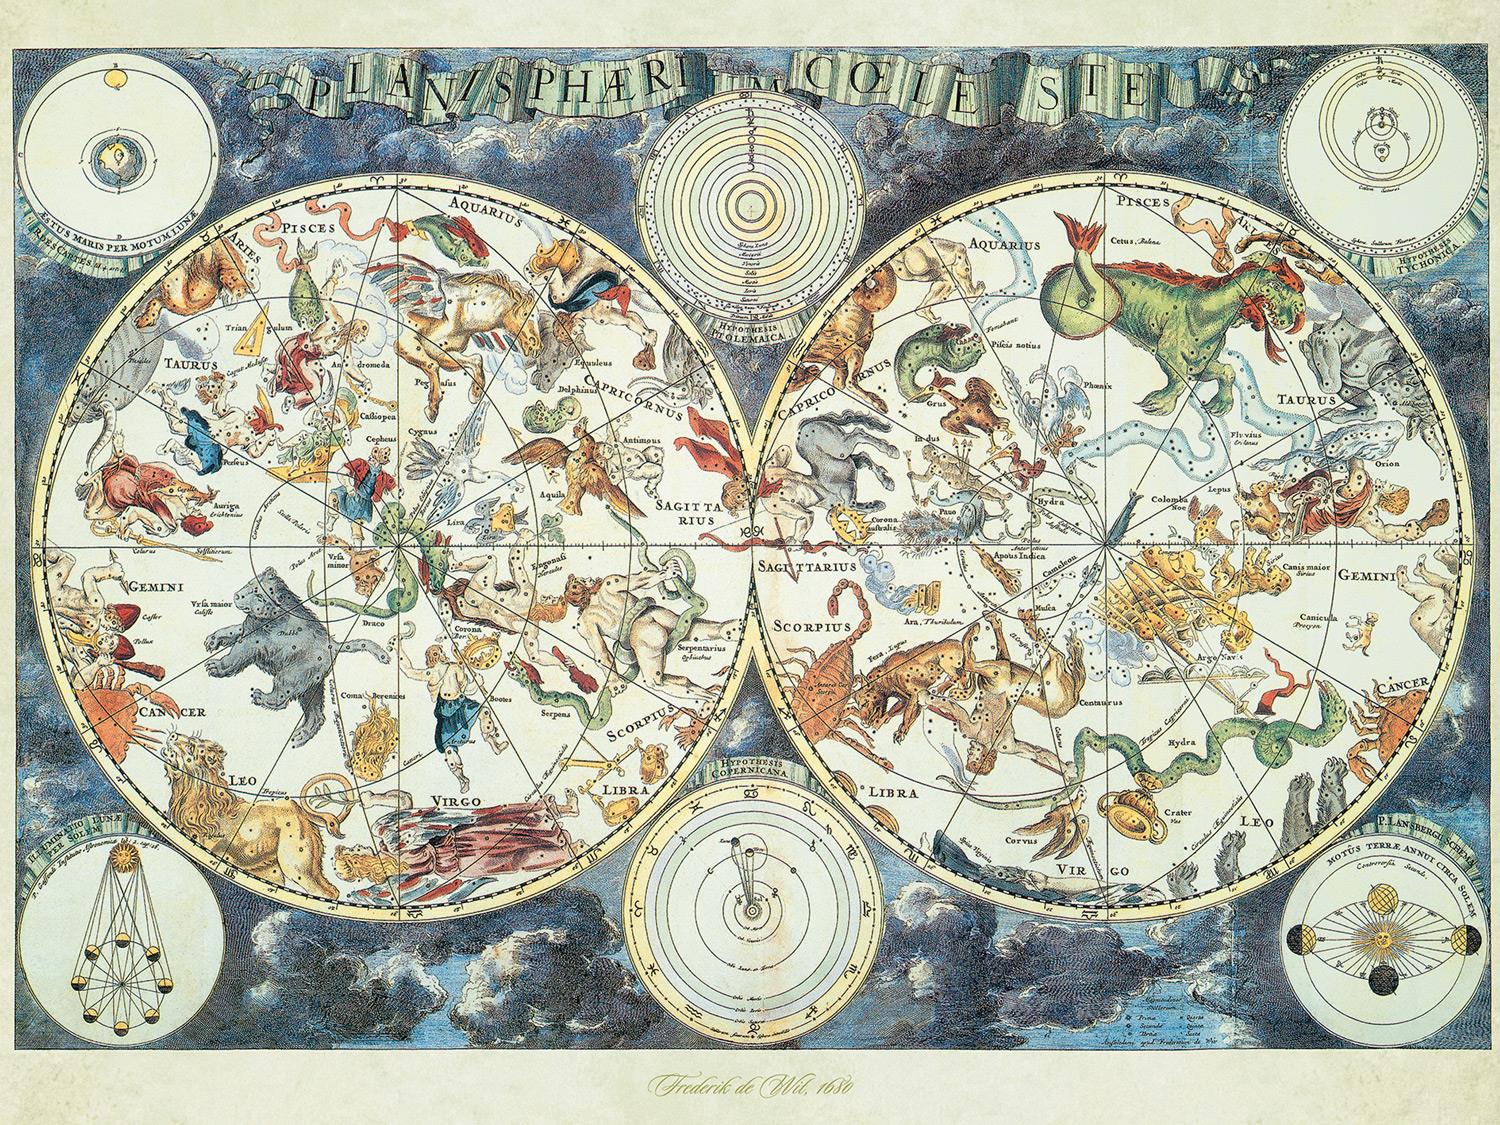 Ravensburger World Map Jigsaw Puzzle (1500 Pieces)